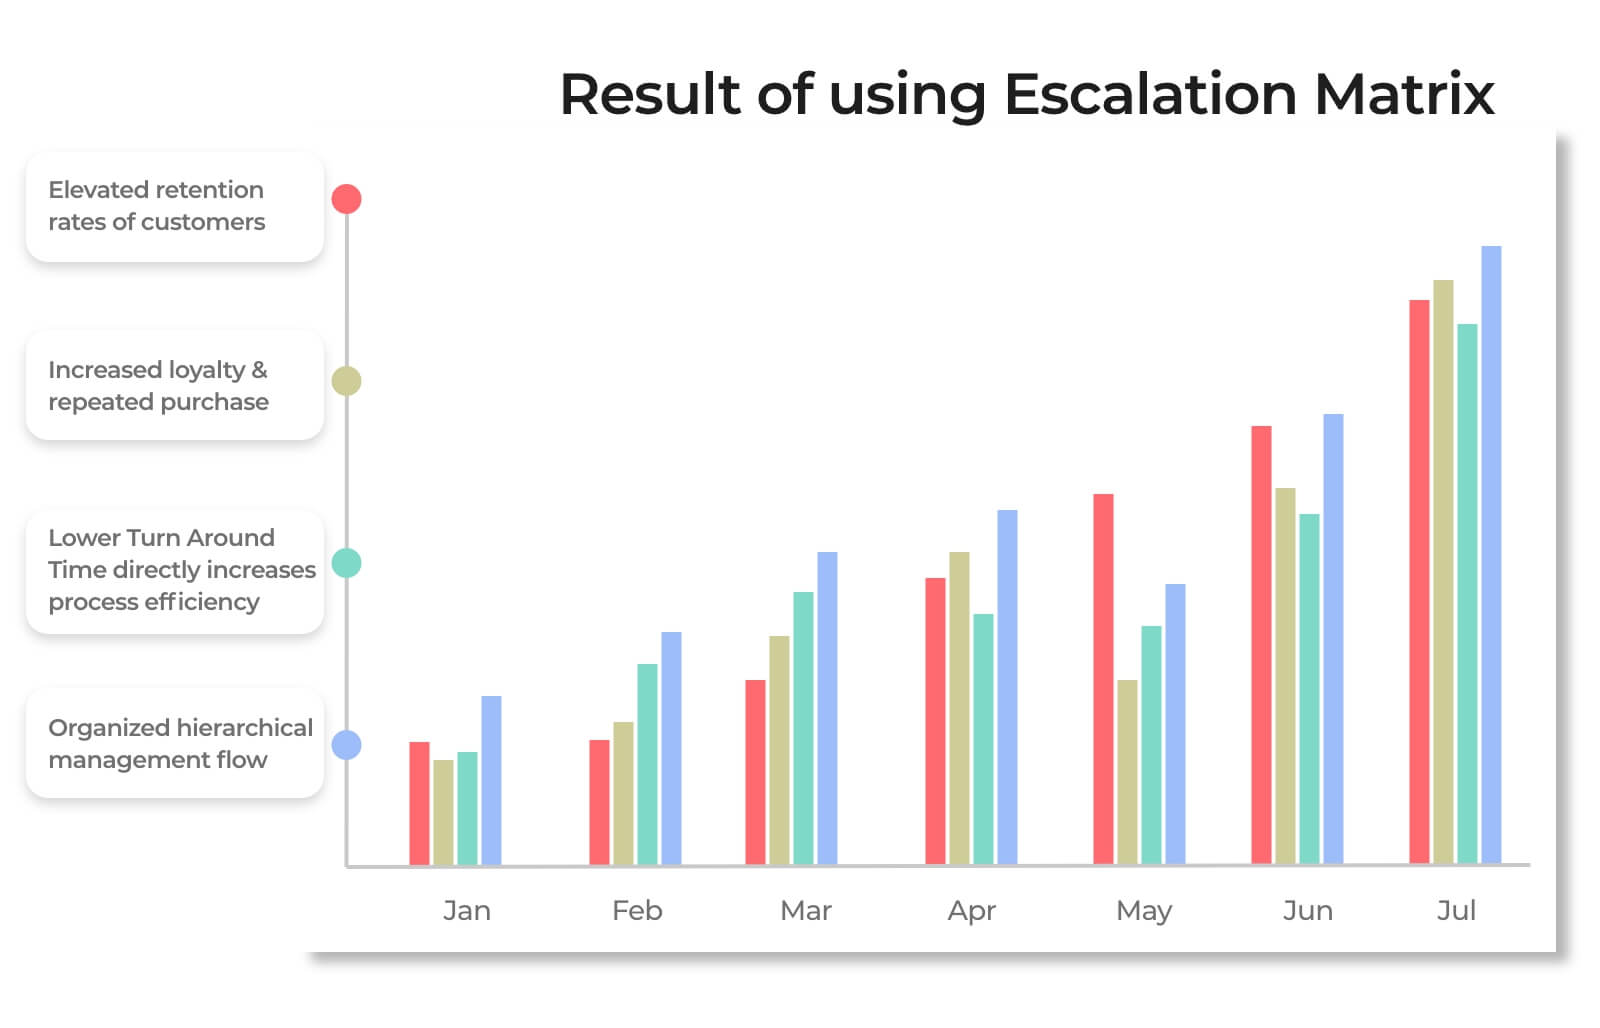 Results of using Escalation matrix